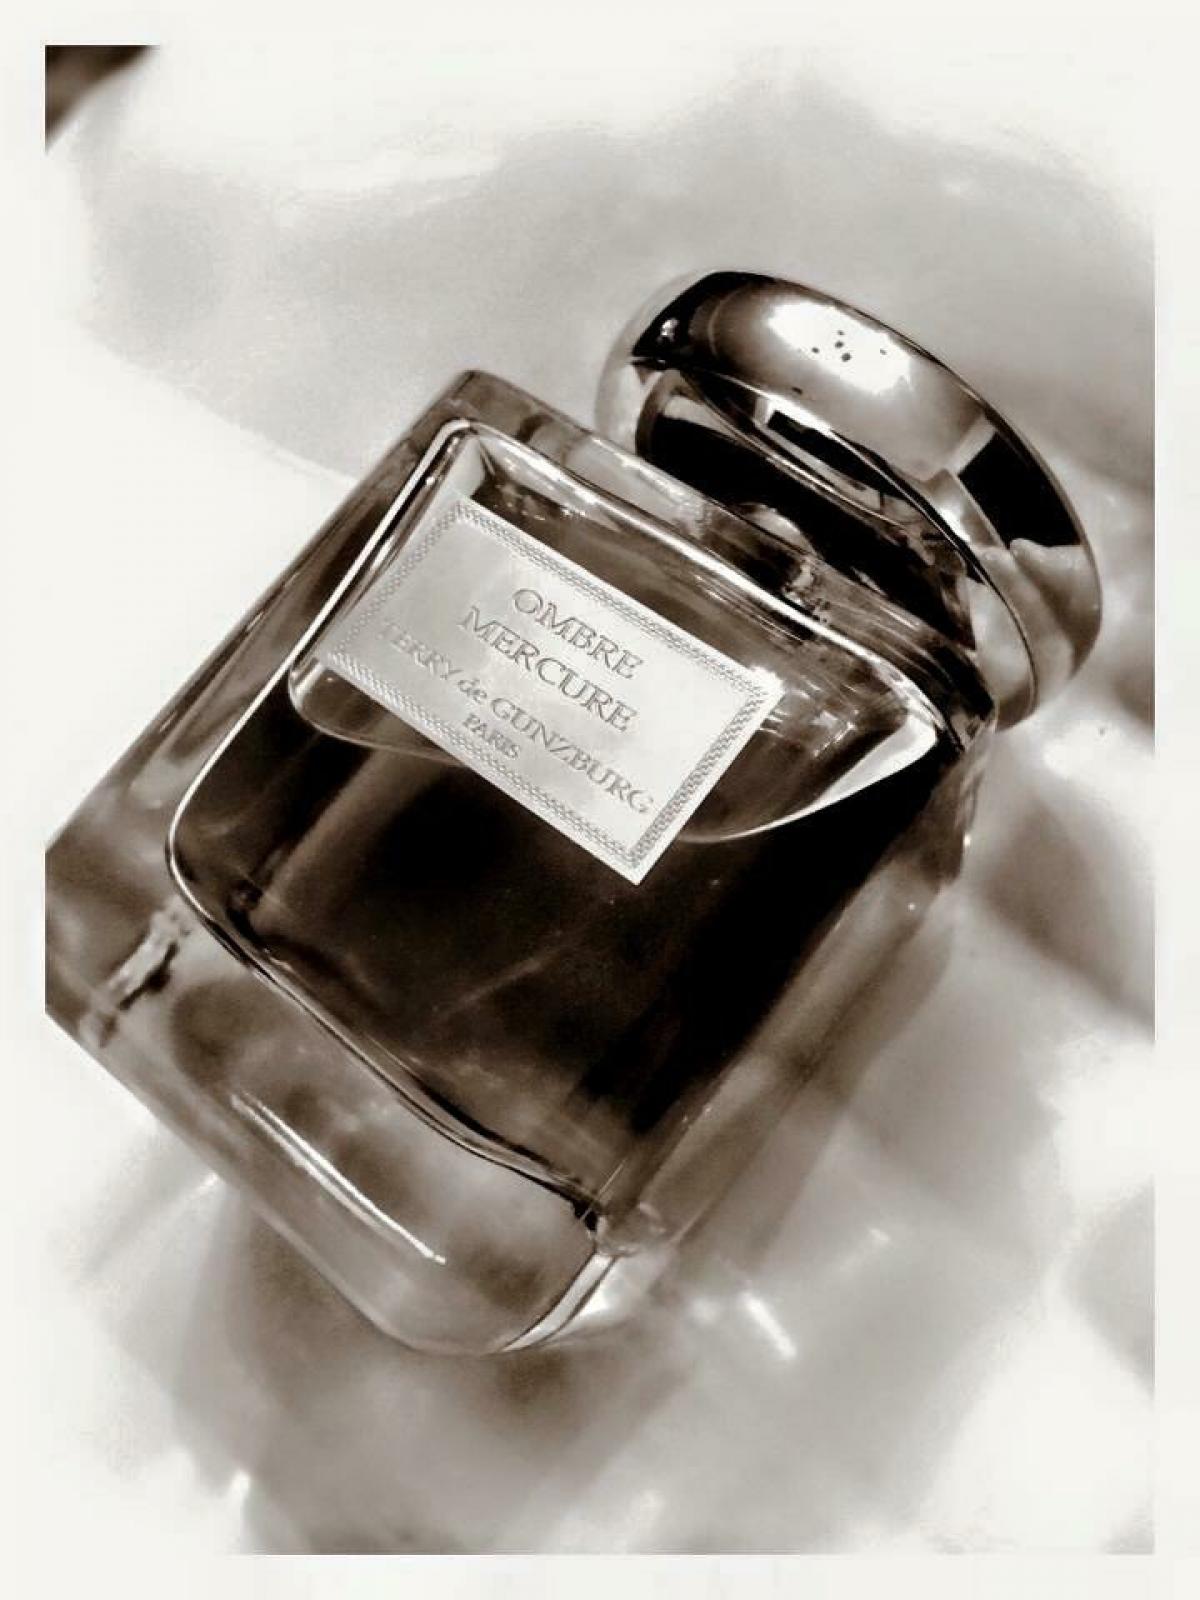 Ombre Mercure Terry de Gunzburg perfume - a fragrance for women 2012